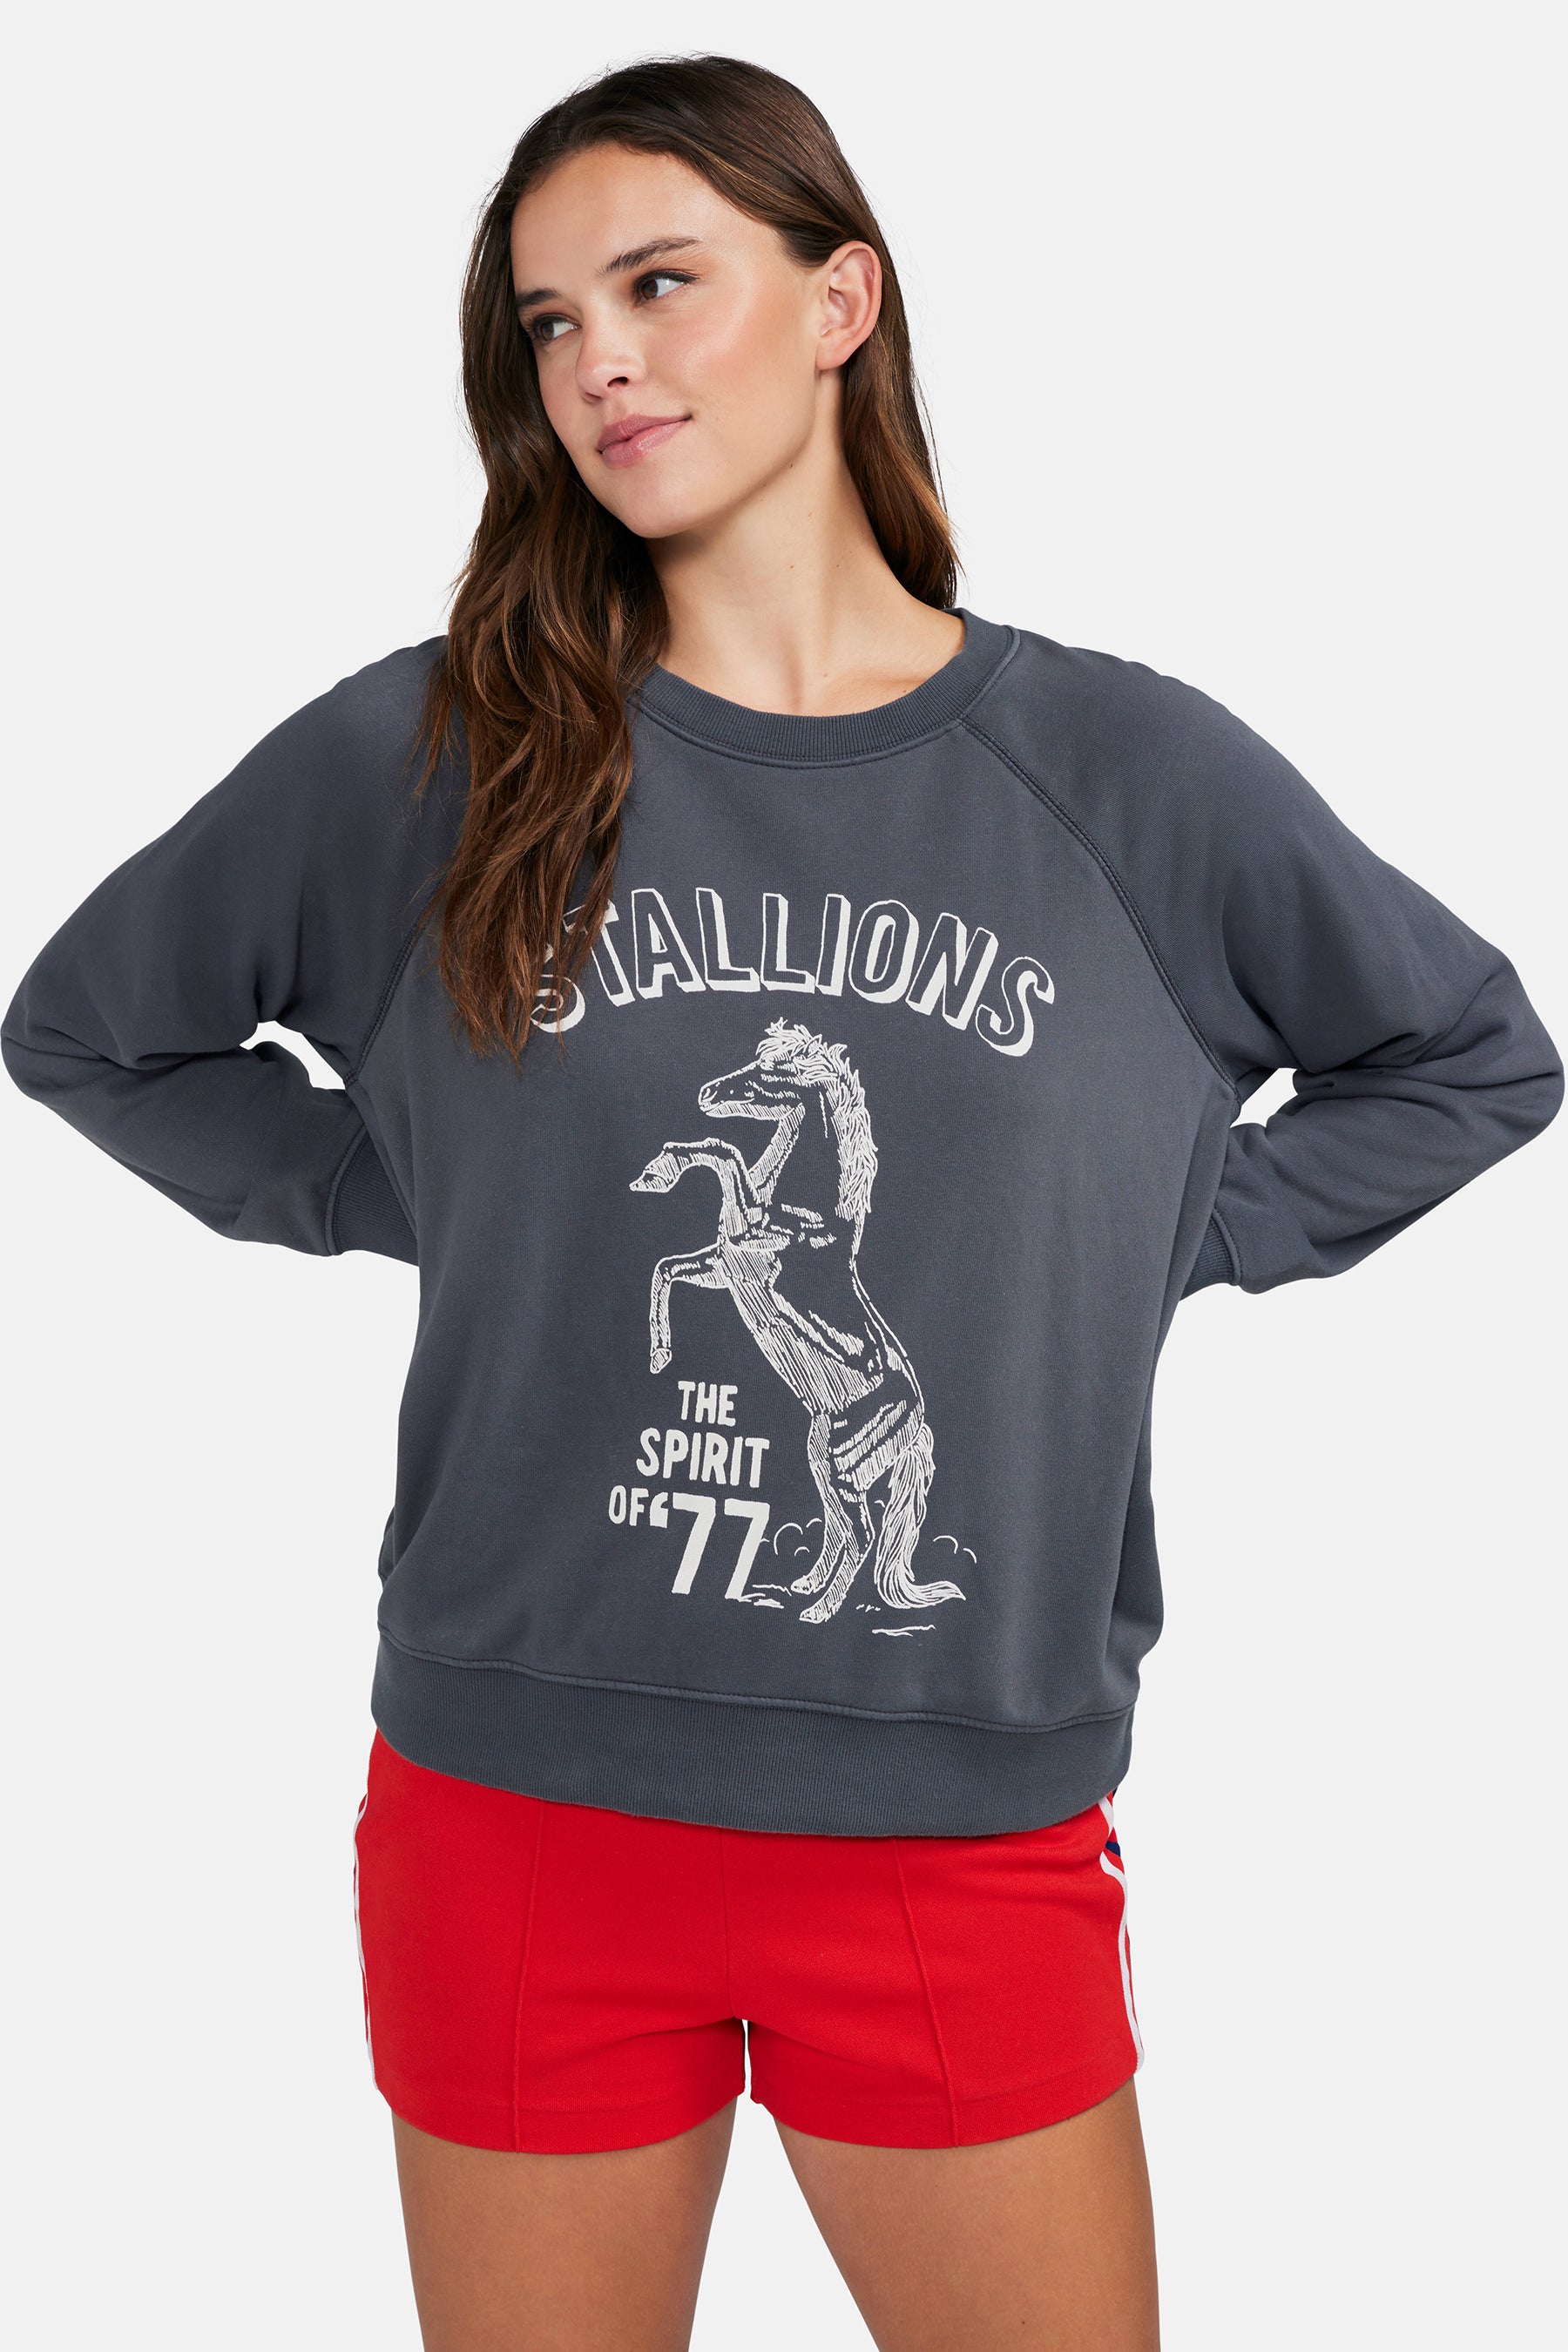 Stallion Of 77 Sommers Sweatshirt | Succulent